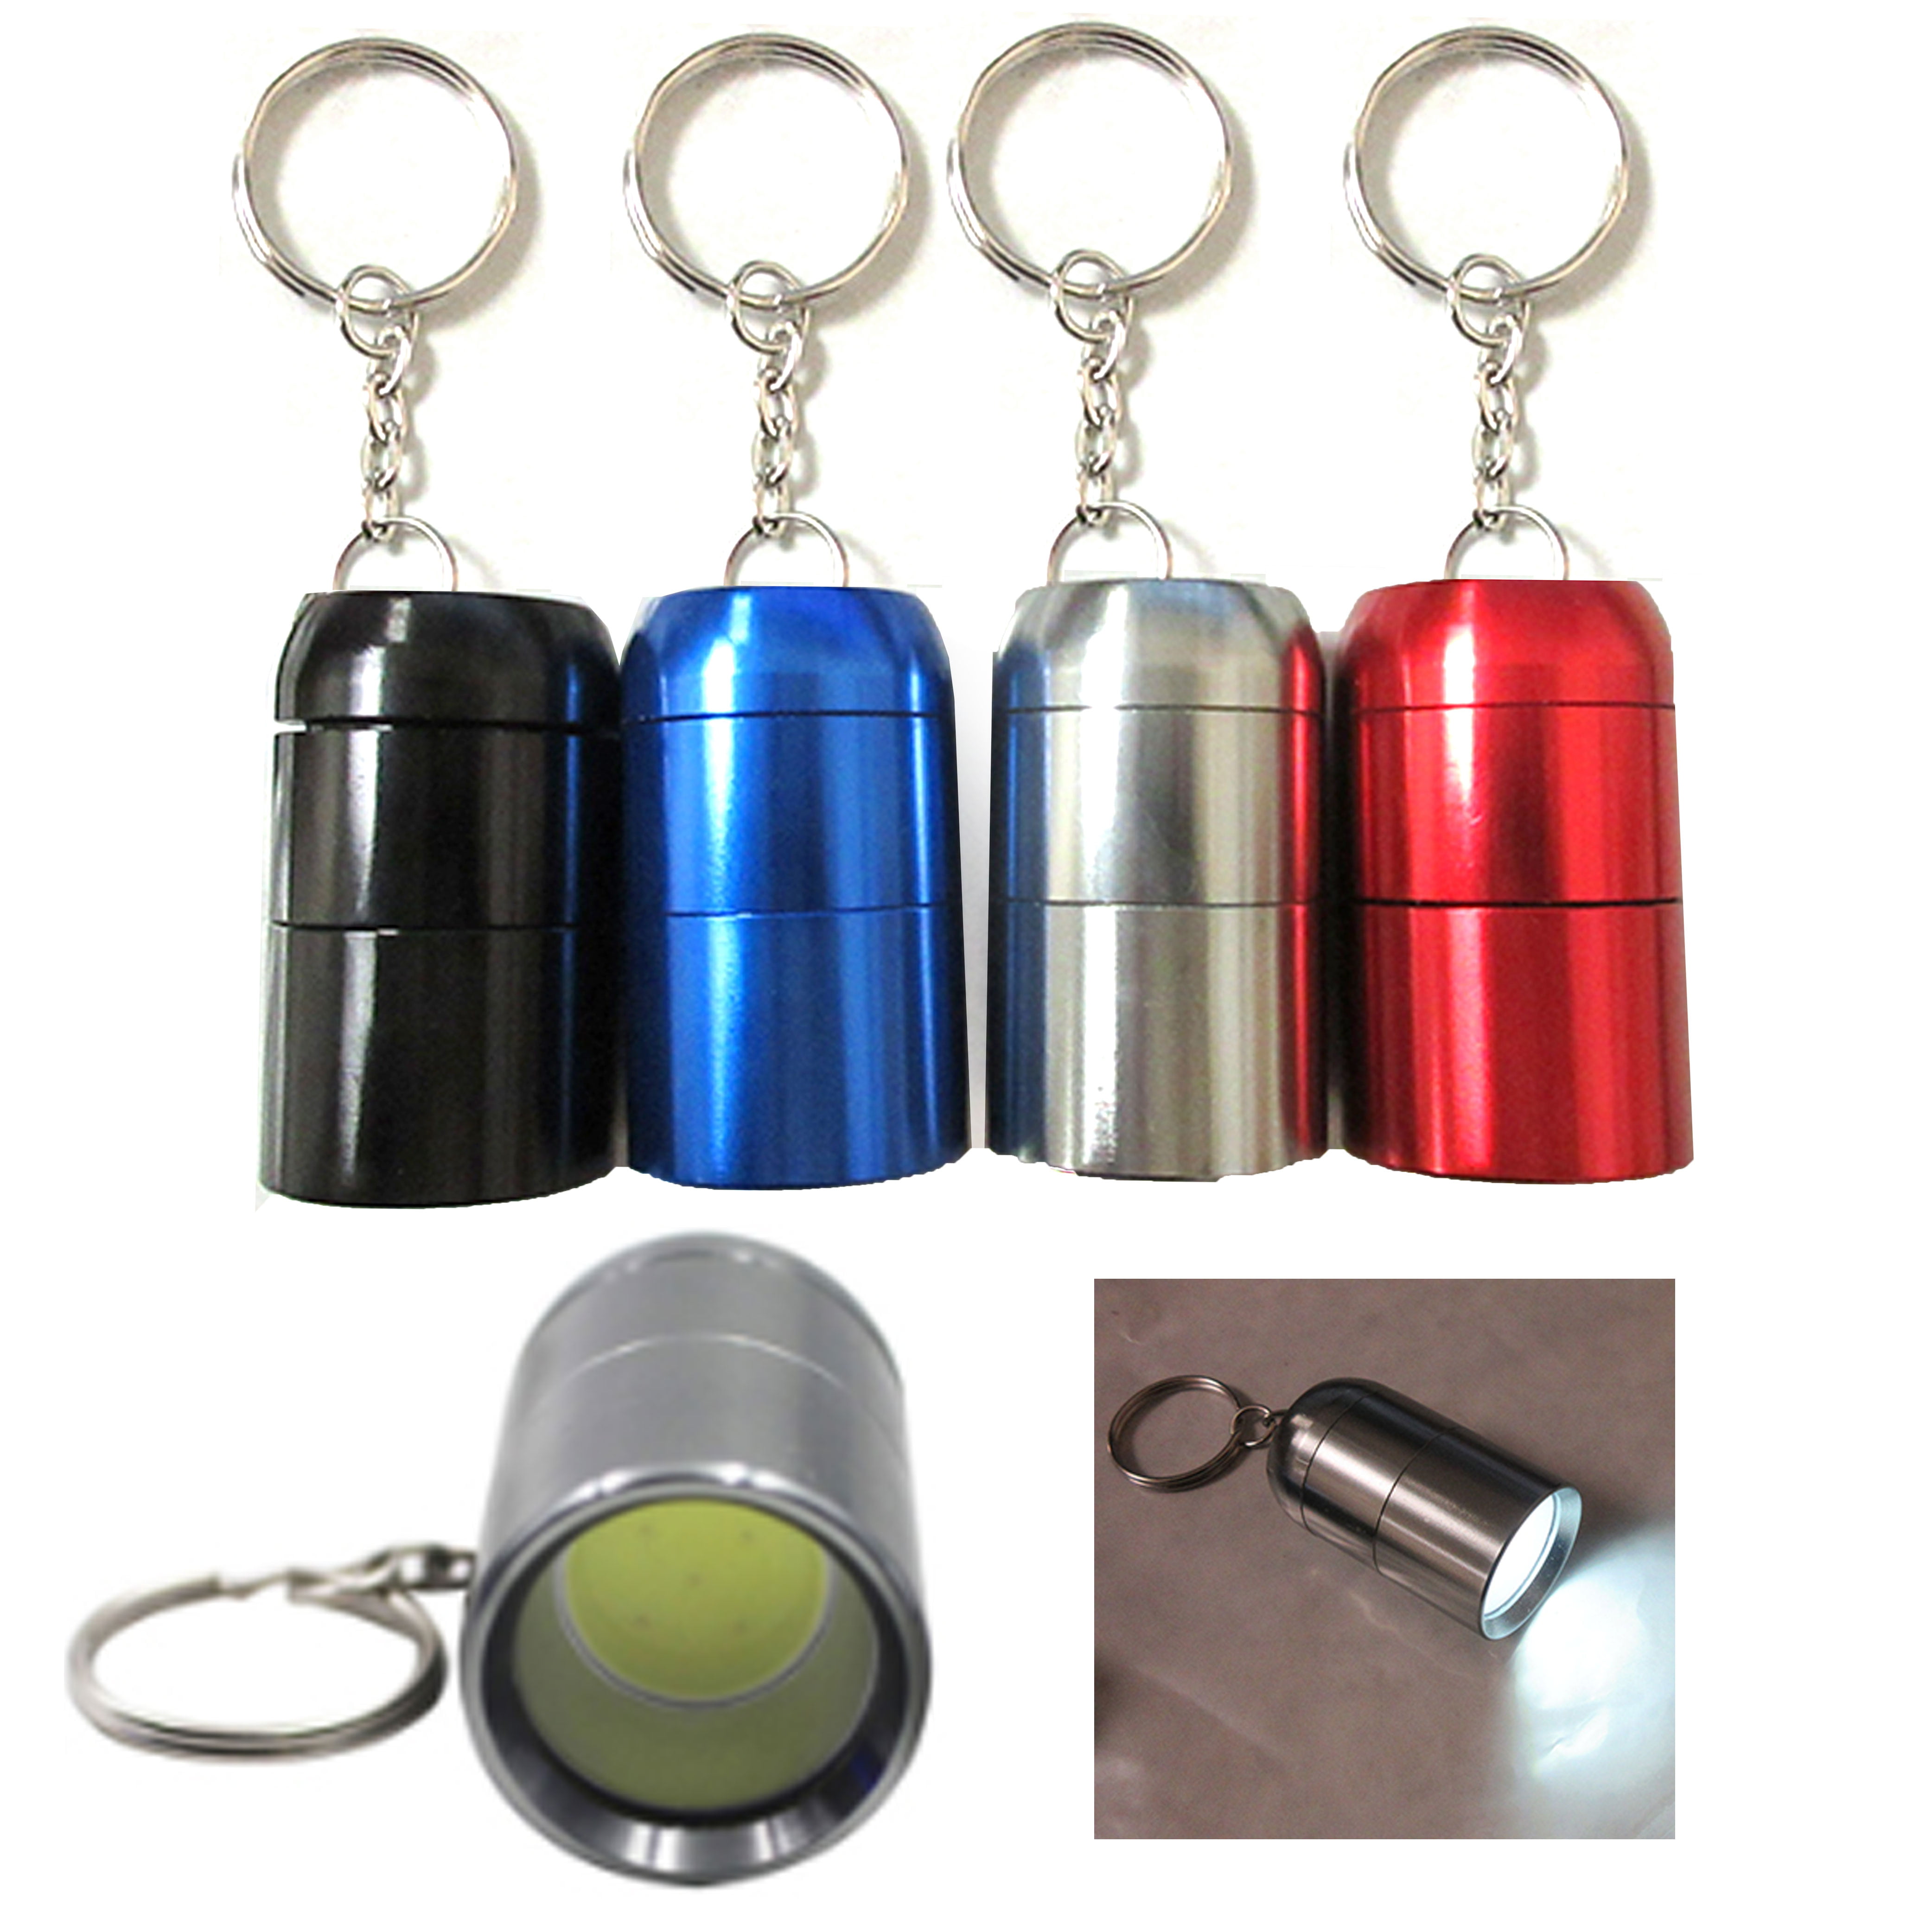 Portable Mini COB Keychain Camping work light handy pocket torch flashlight 1W